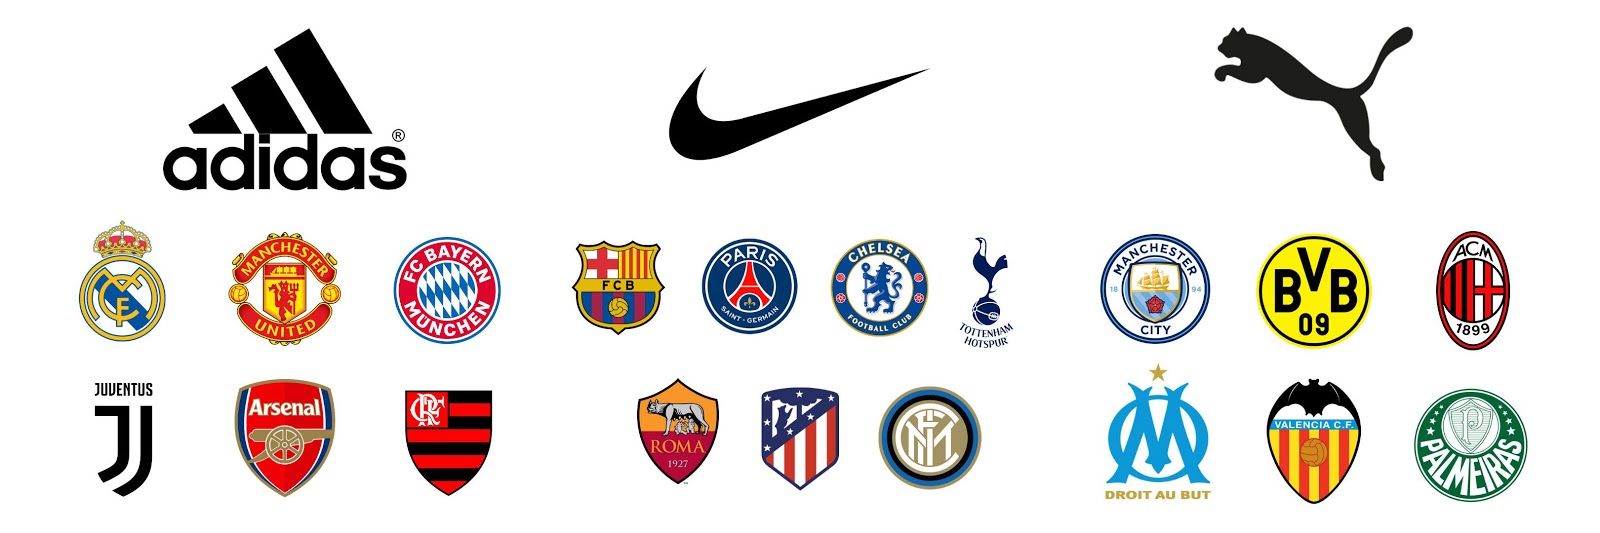 adidas sponsored soccer teams